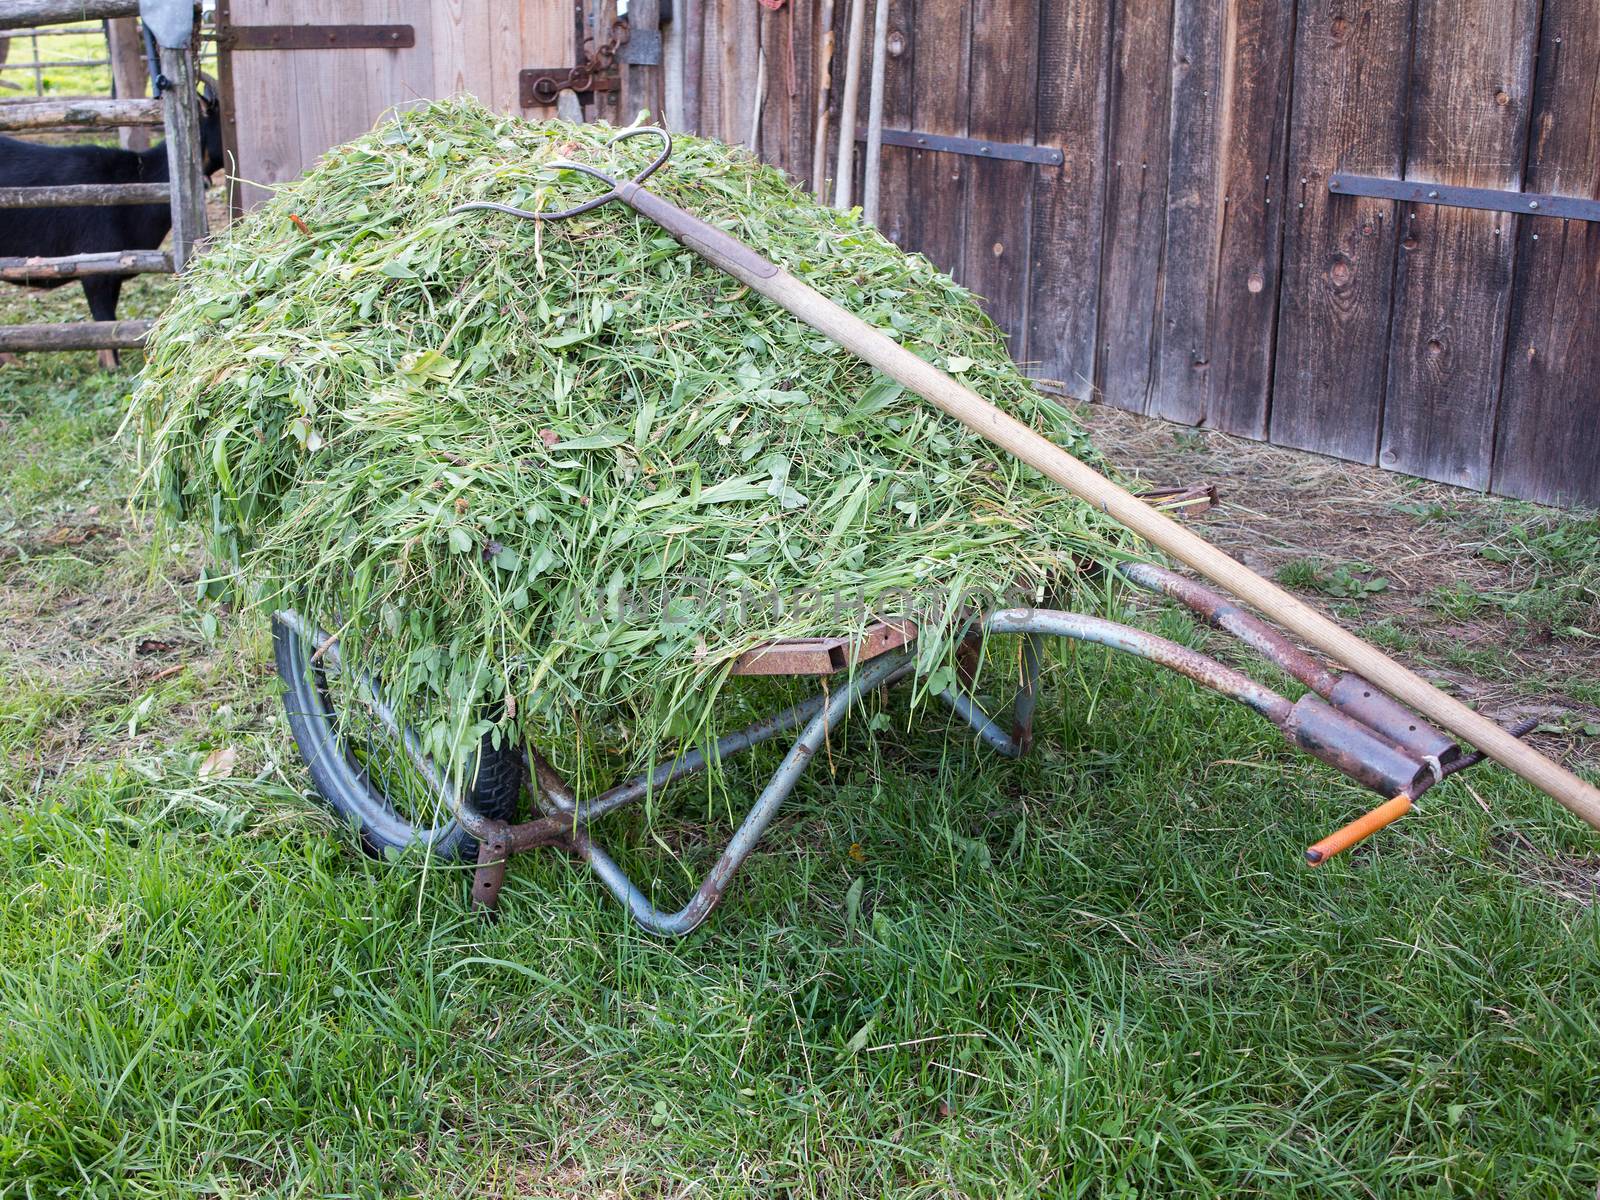 Wheelbarrow full of freshly mowed grass